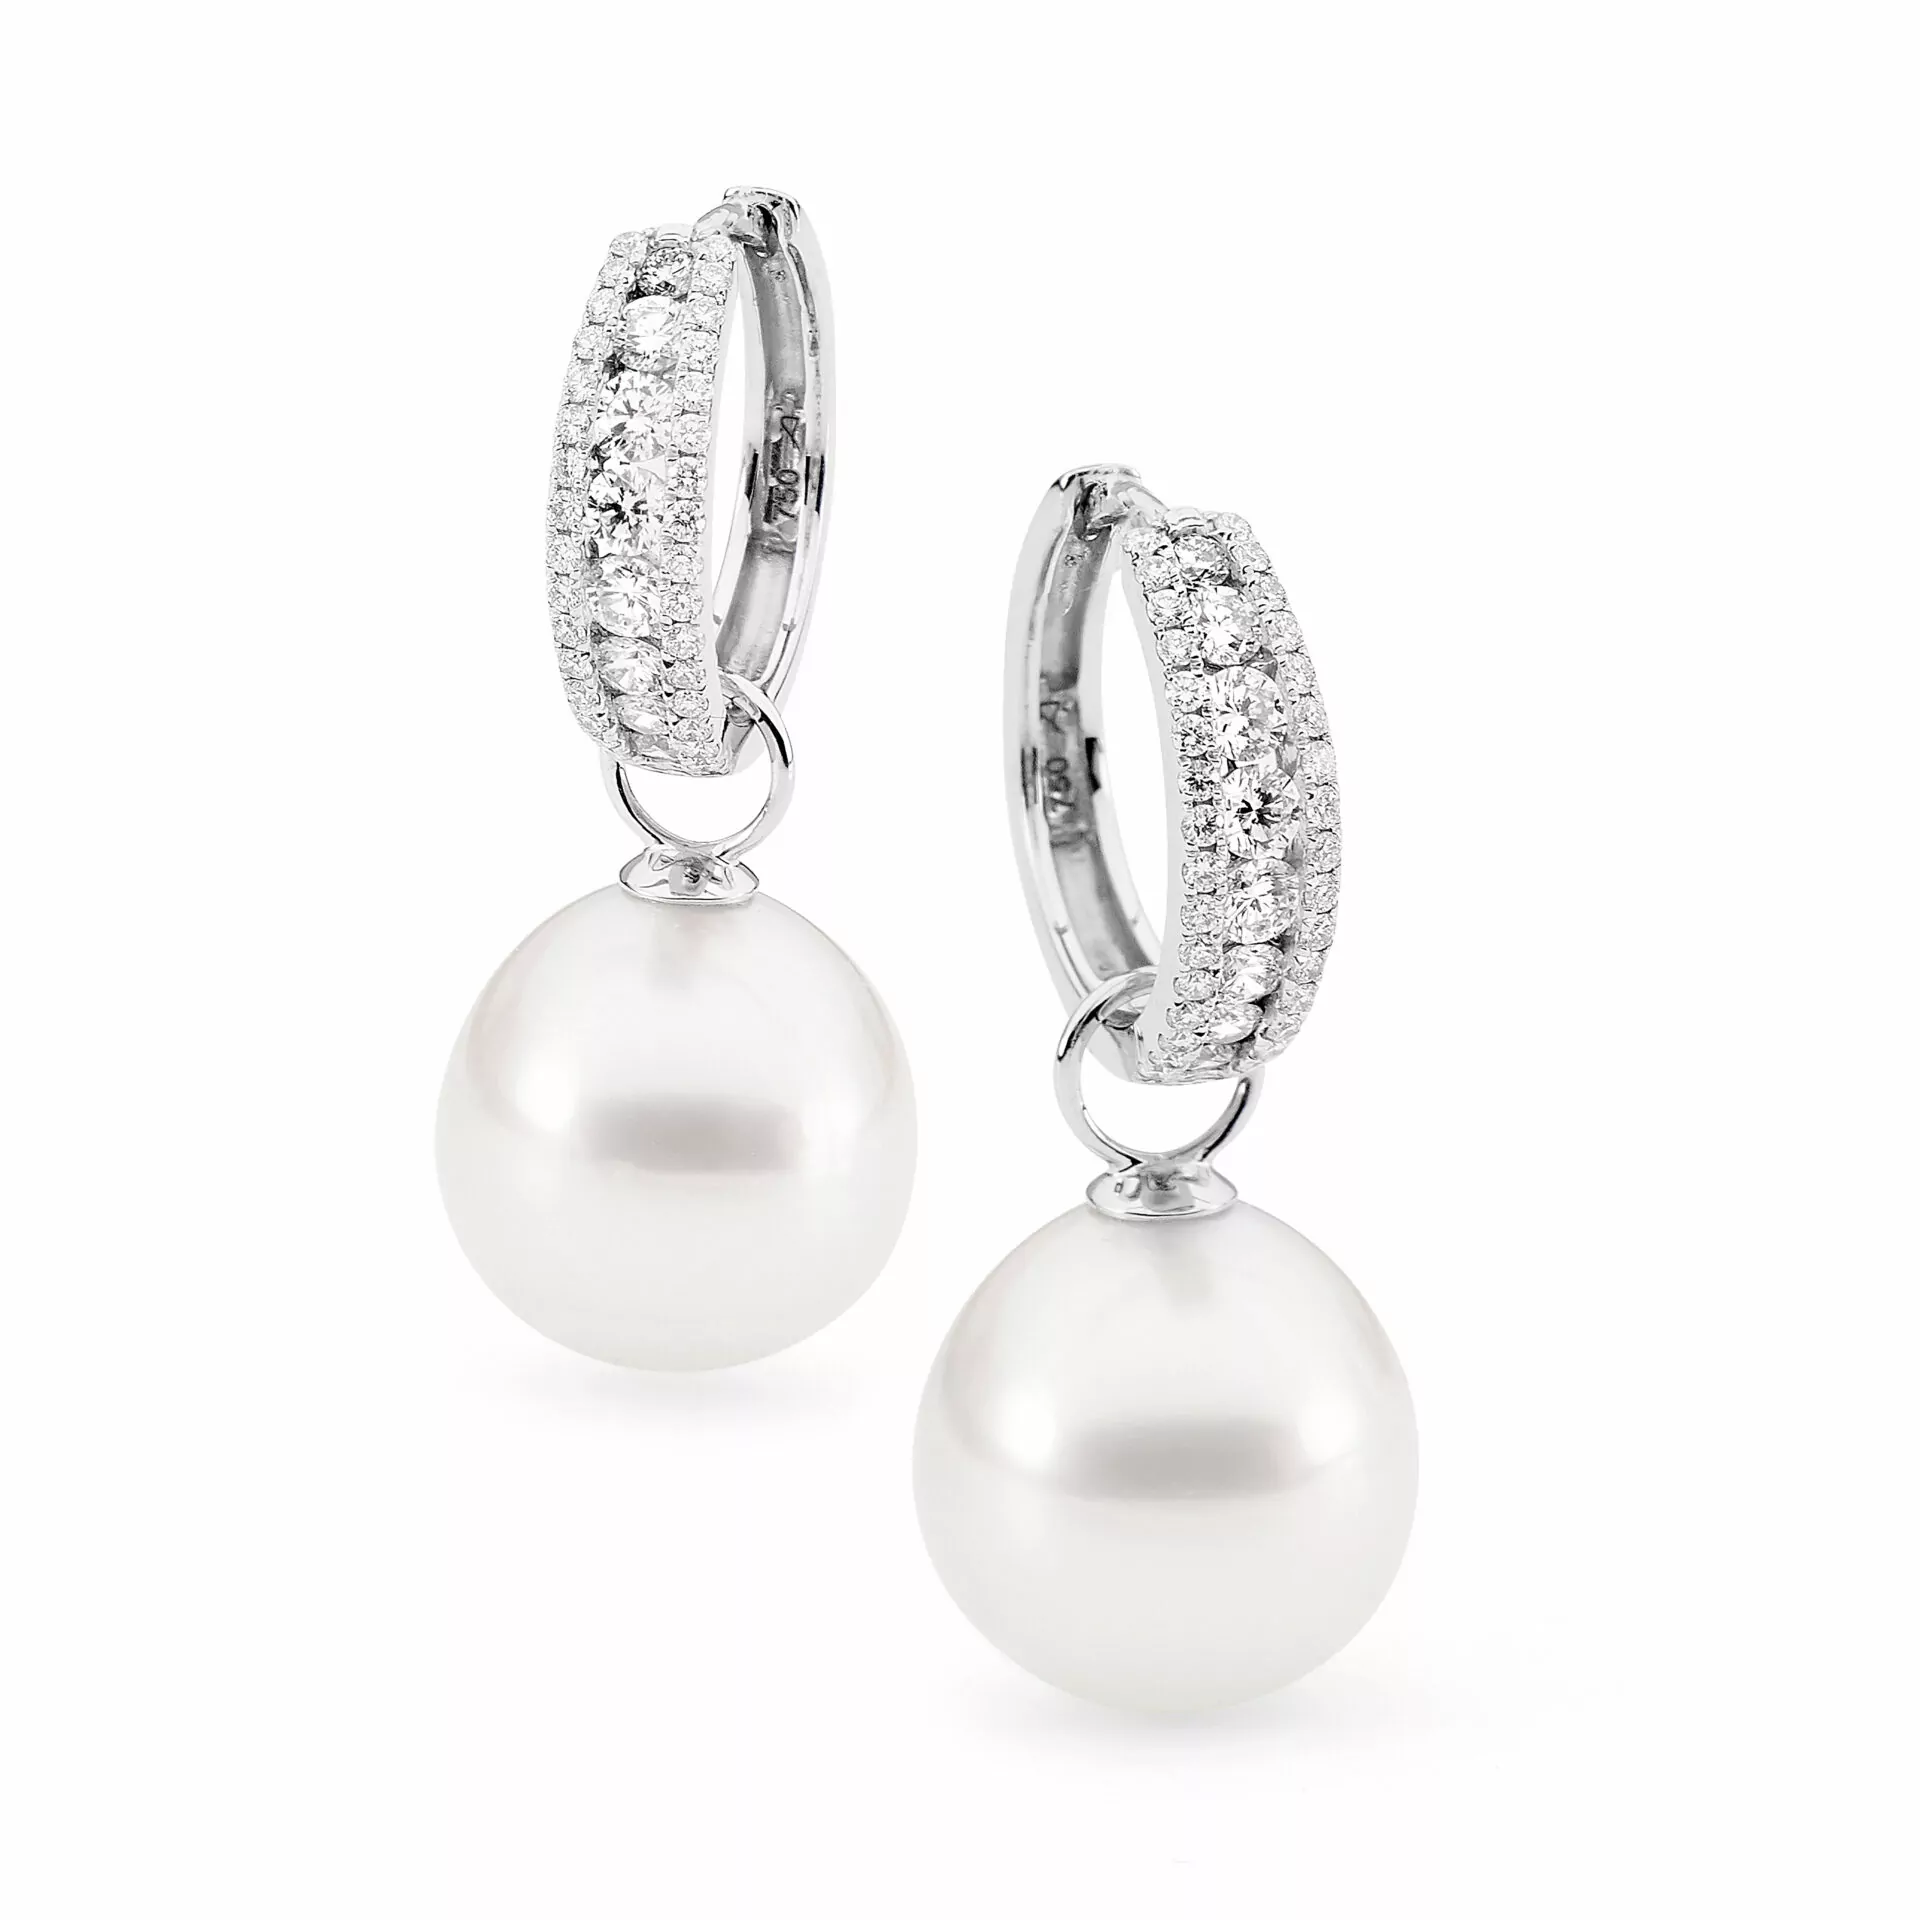 Allure Pearls earrings 2